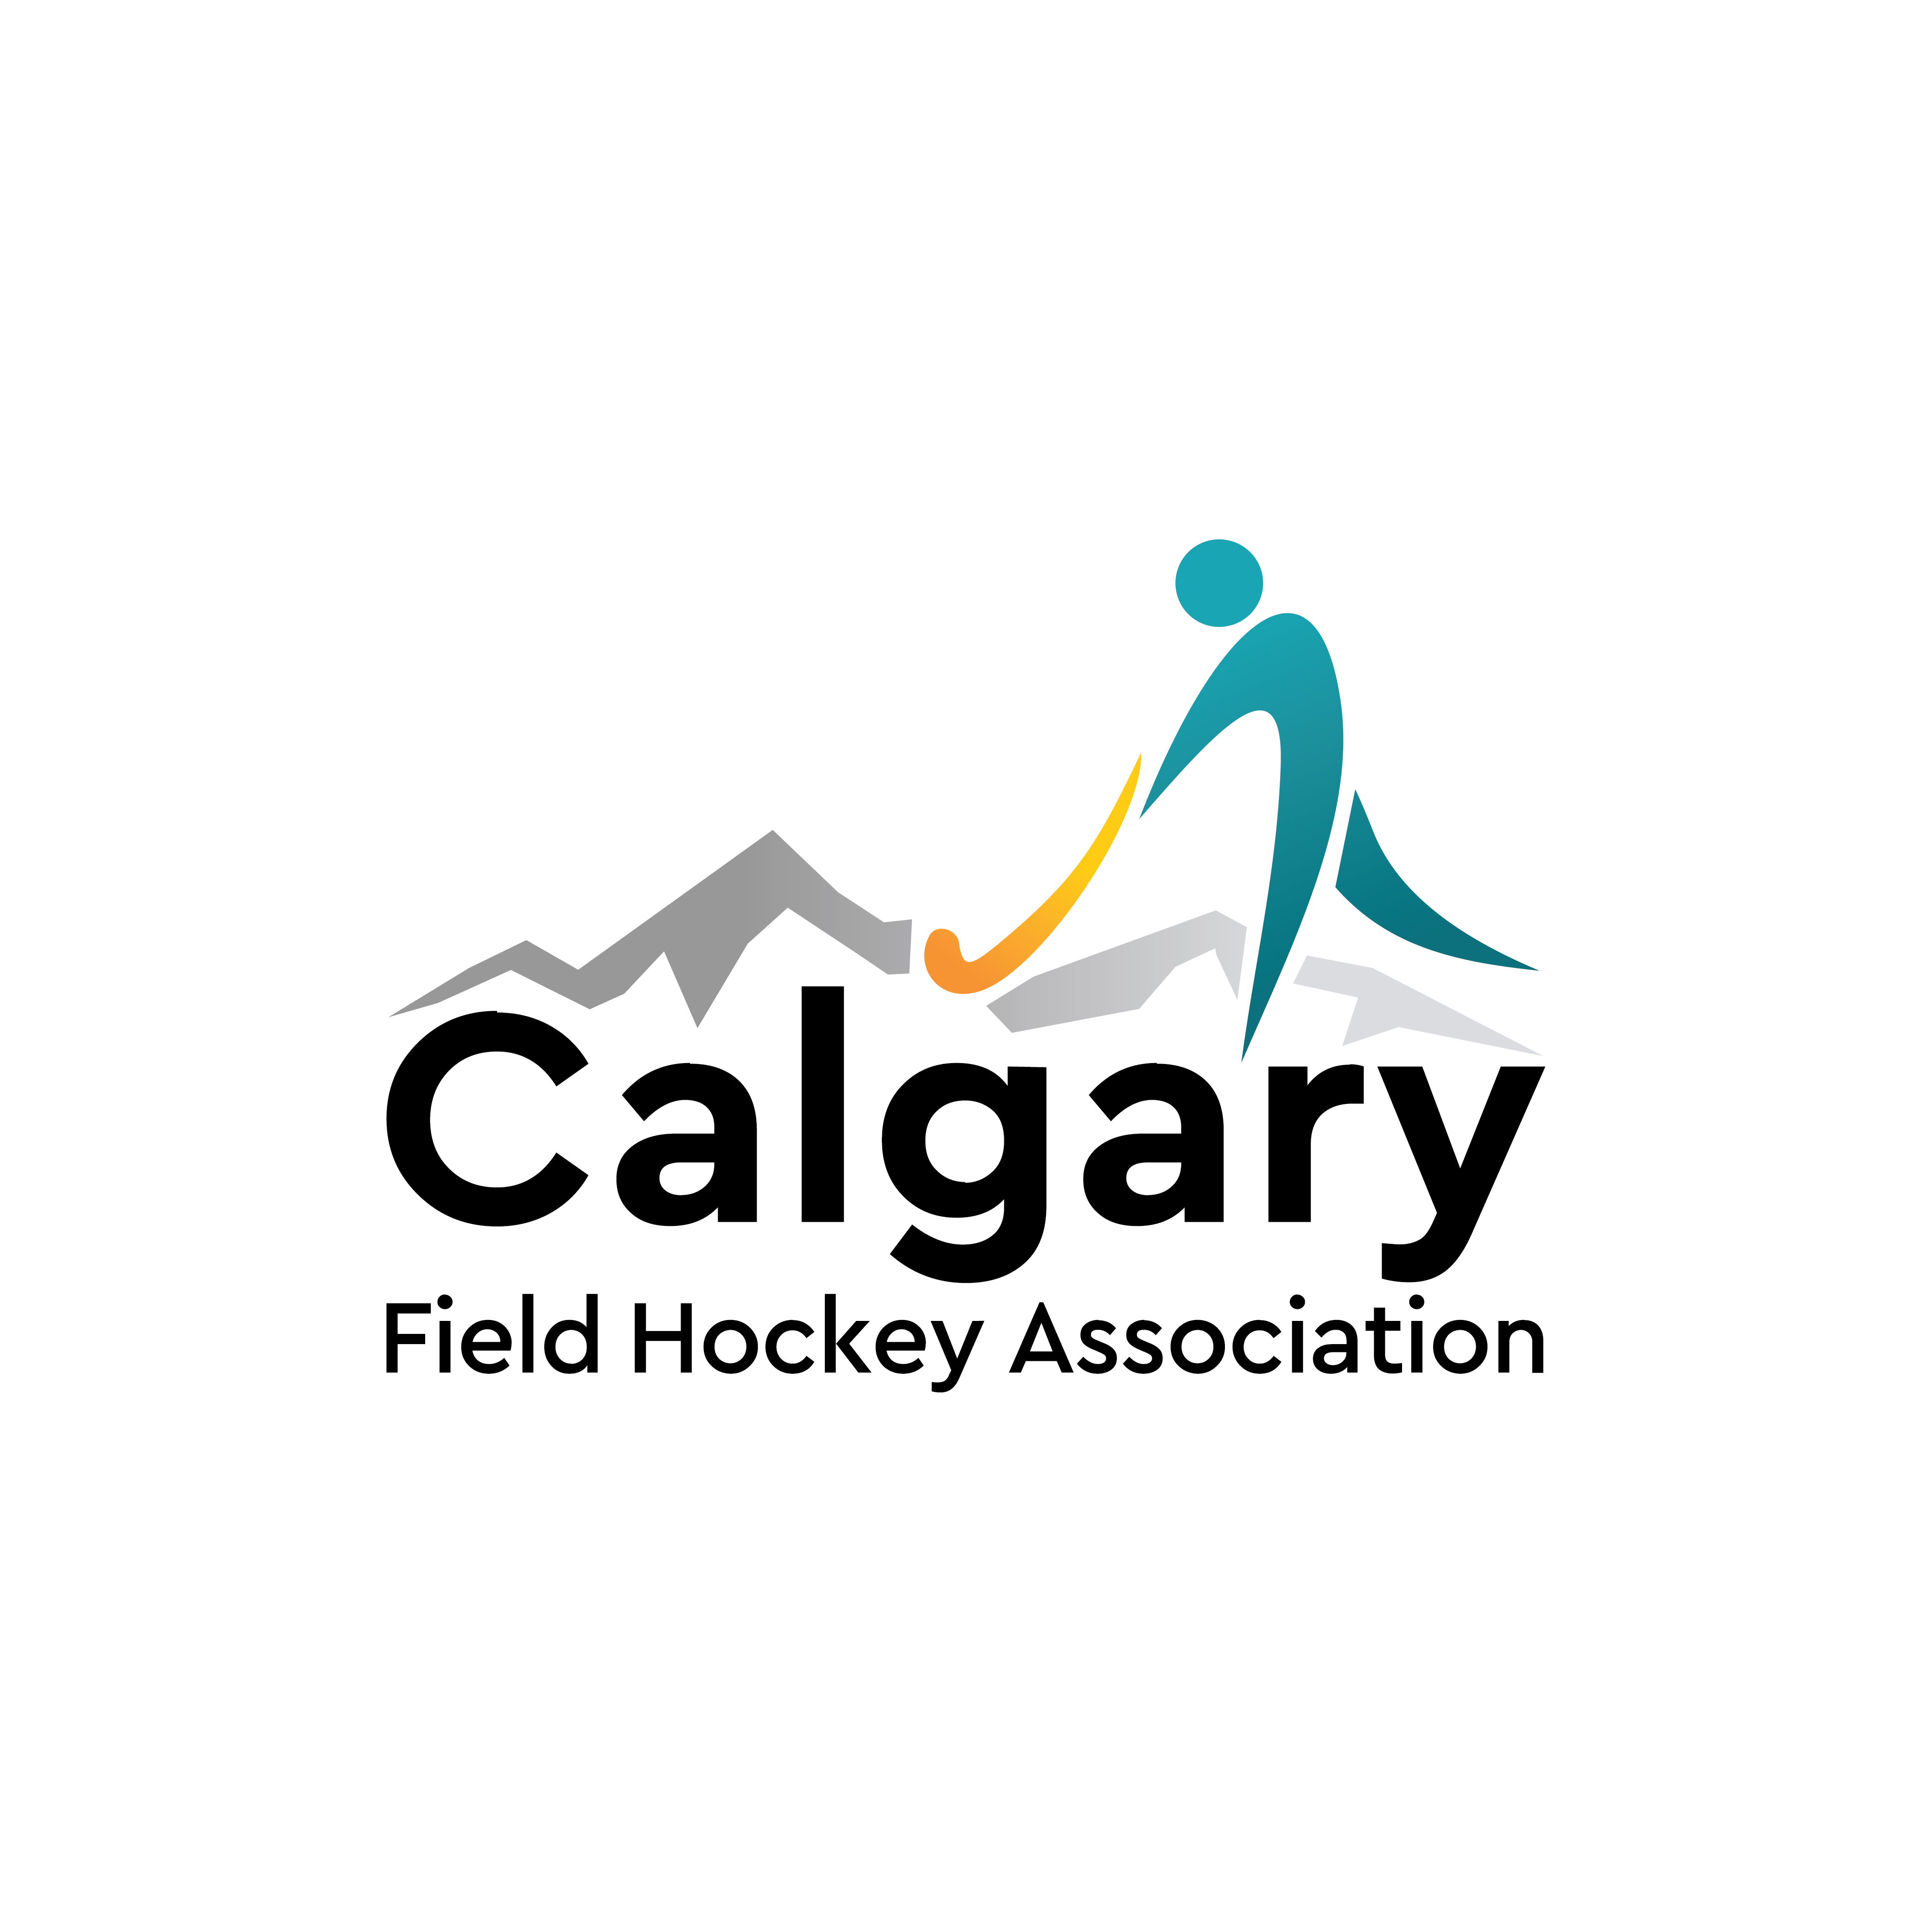 Field Hockey Association of Calgary (Men's League)